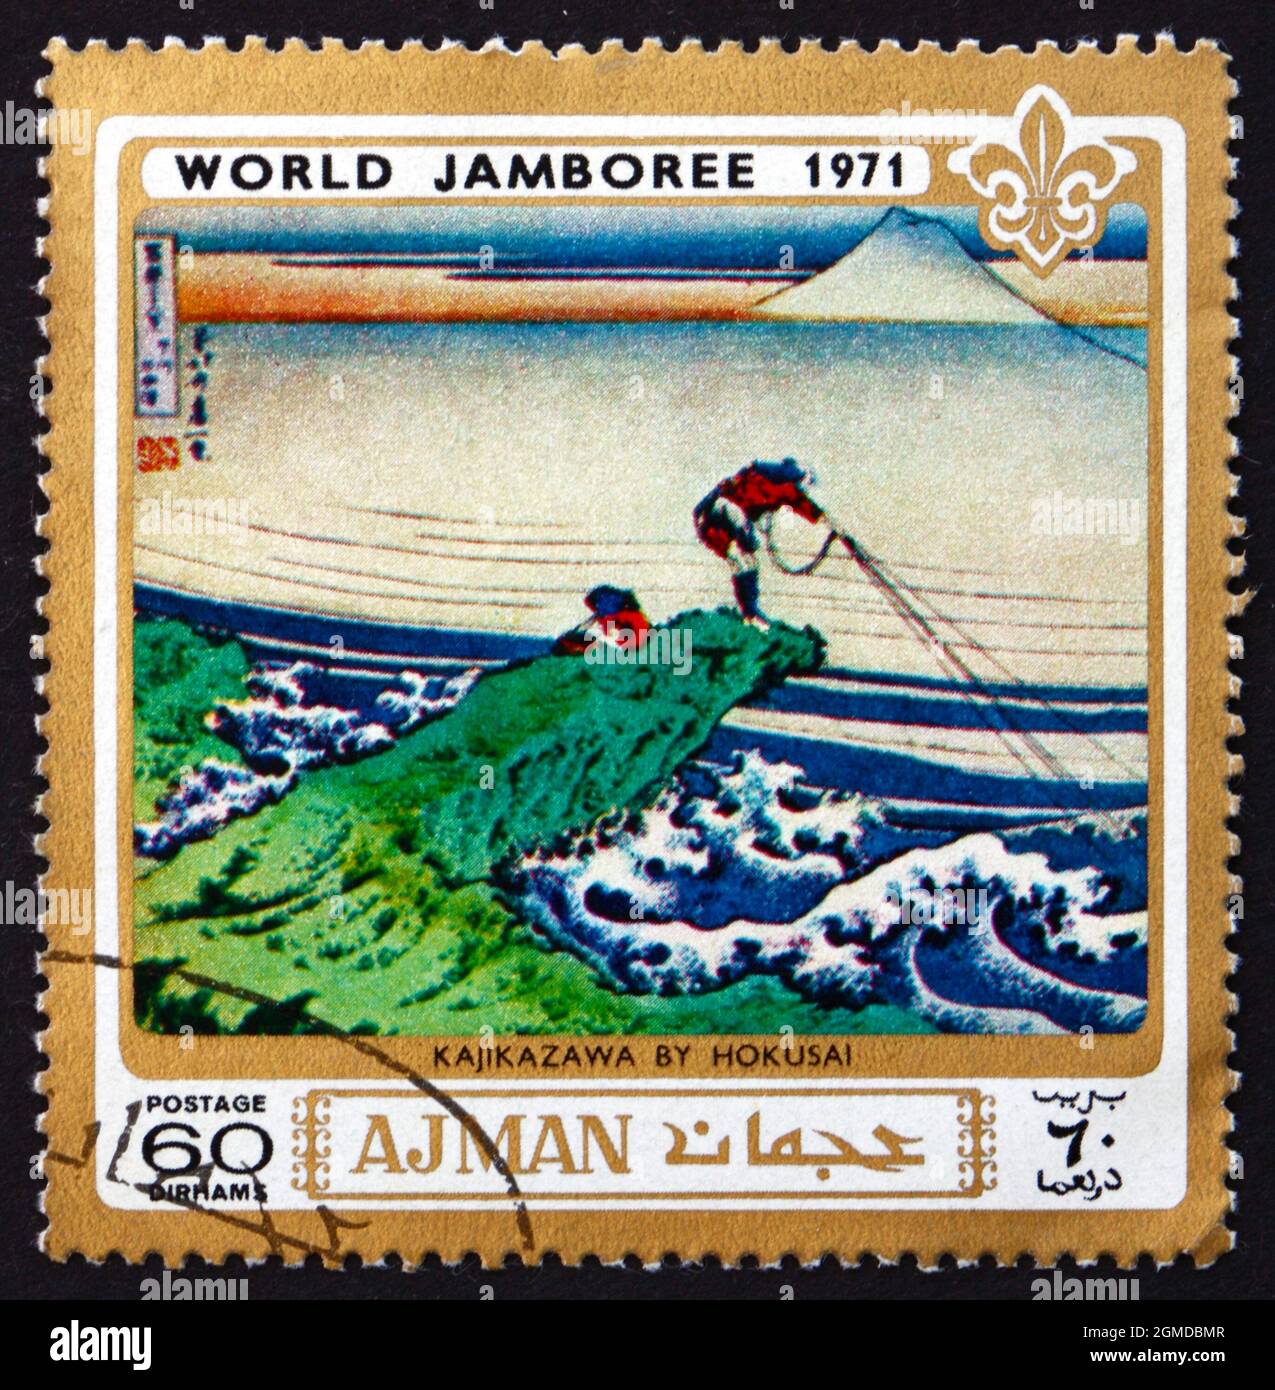 AJMAN - CIRCA 1971: a stamp printed in the Ajman shows Kayikazawa, Painting by Hokusai, World Jamboree 1971, circa 1971 Stock Photo